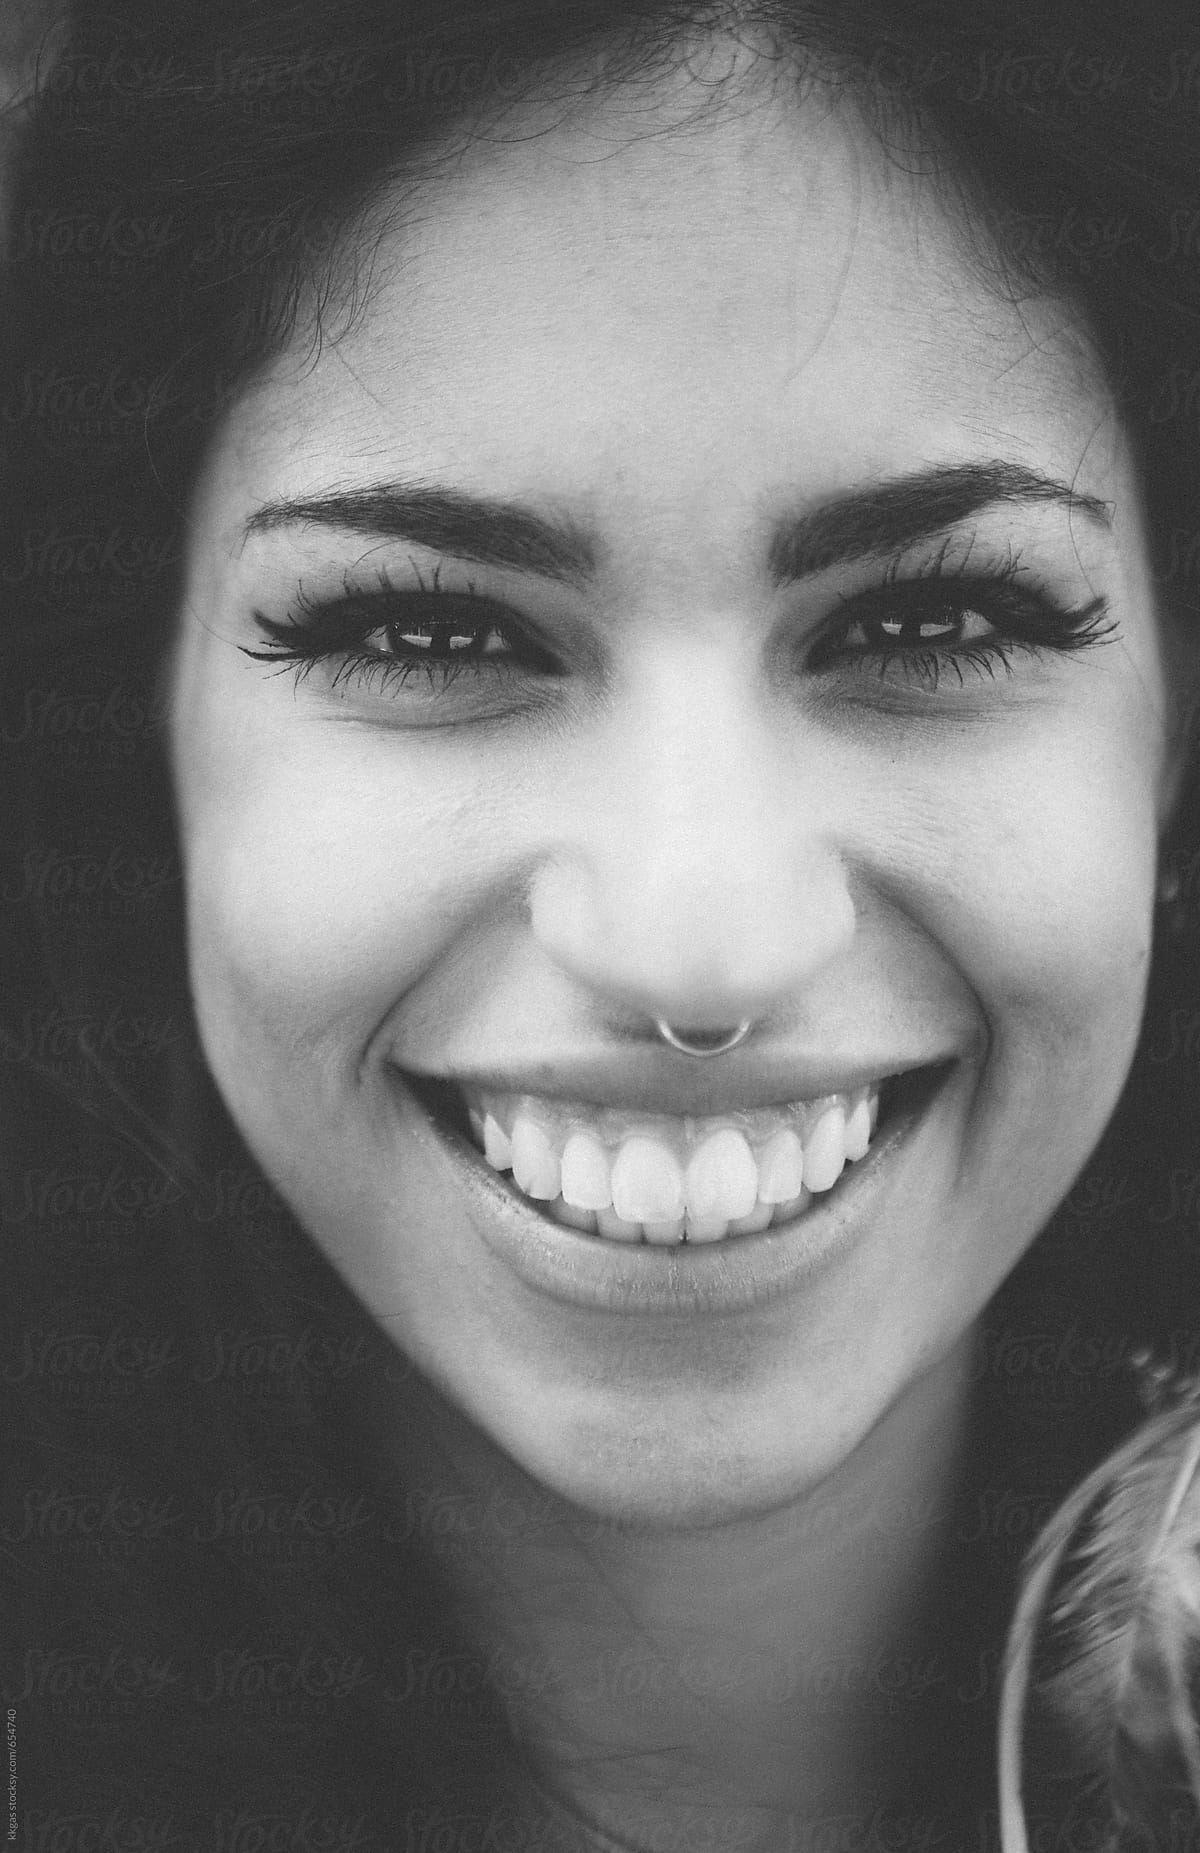 Portraits of a beautiful Persian woman smiling